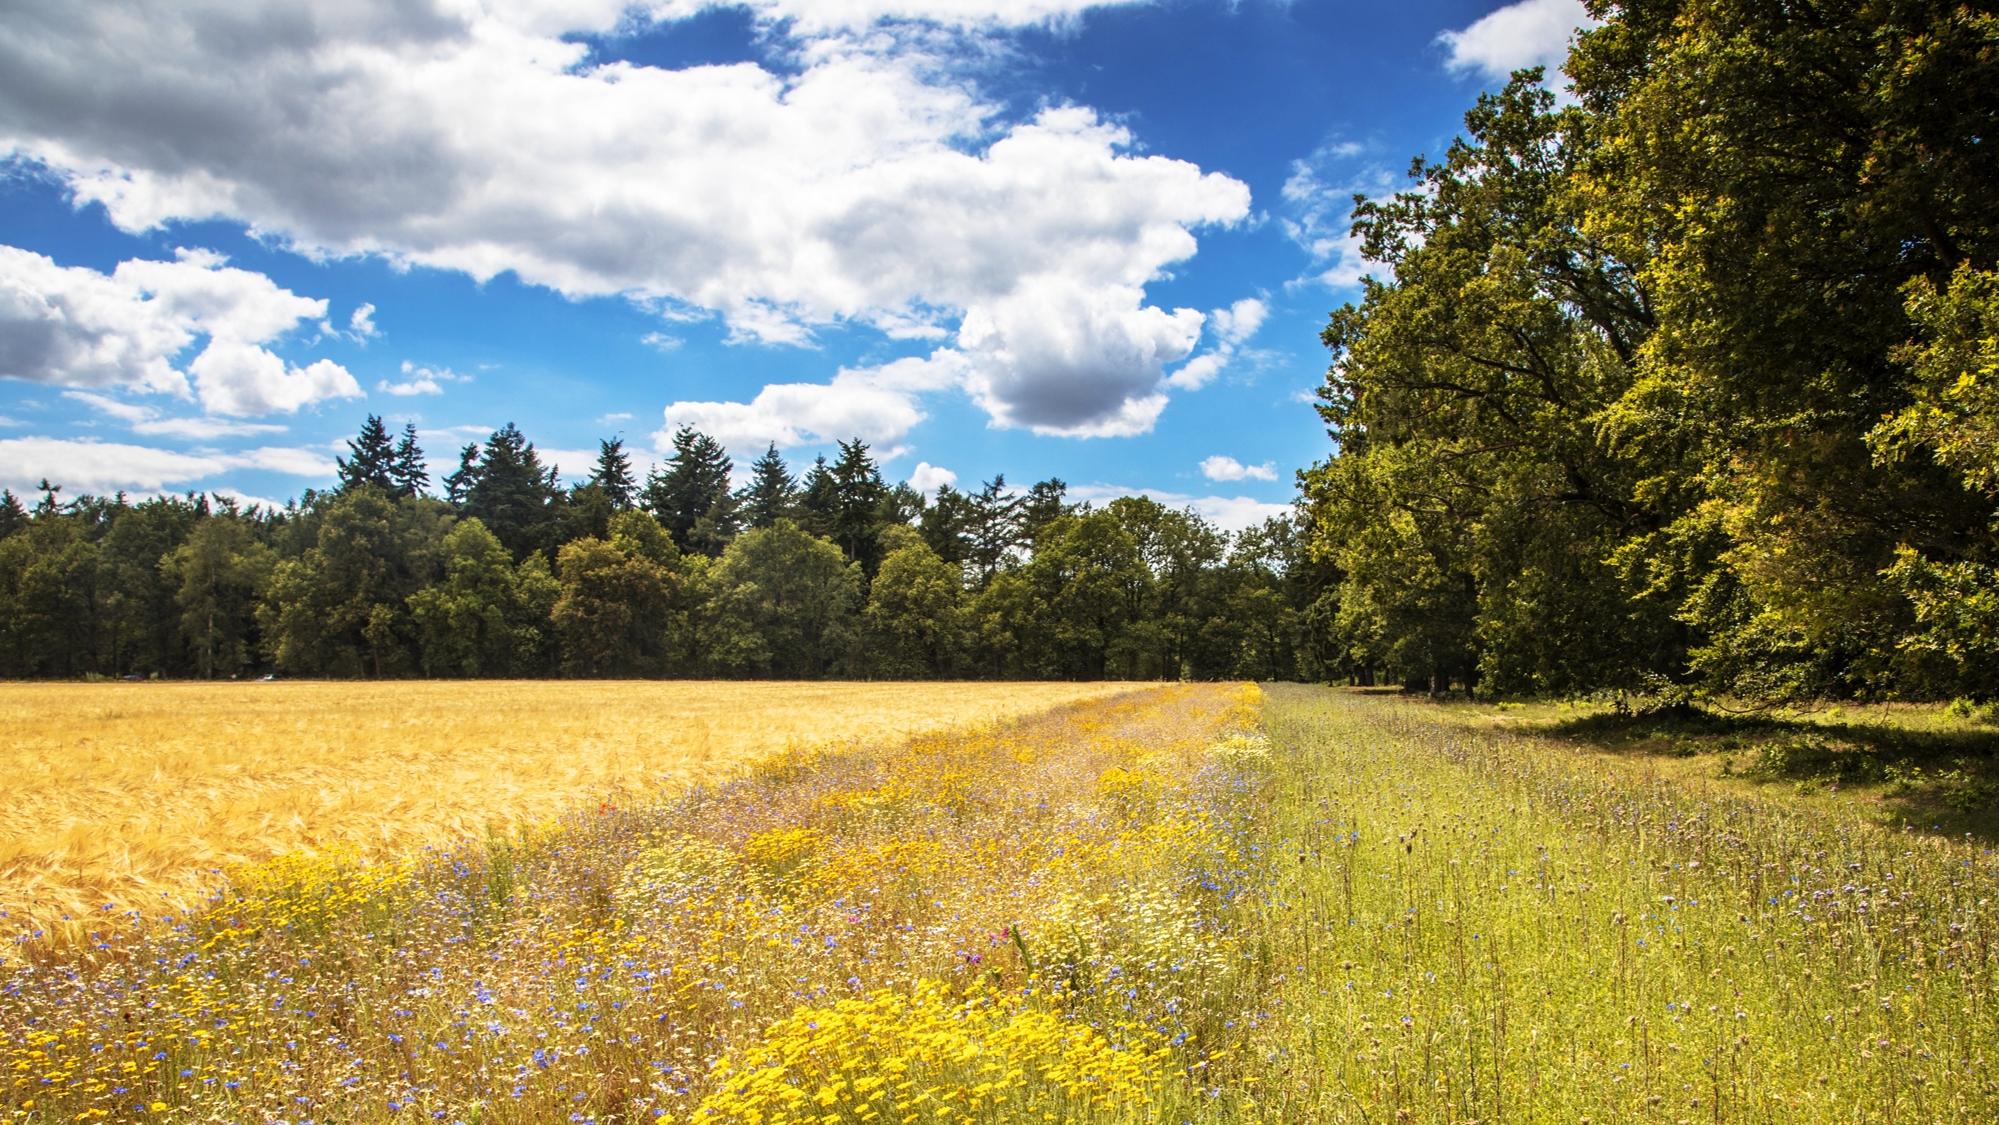 BASF se compromete a impulsar la agricultura sostenible en Europa a través de objetivos concretos